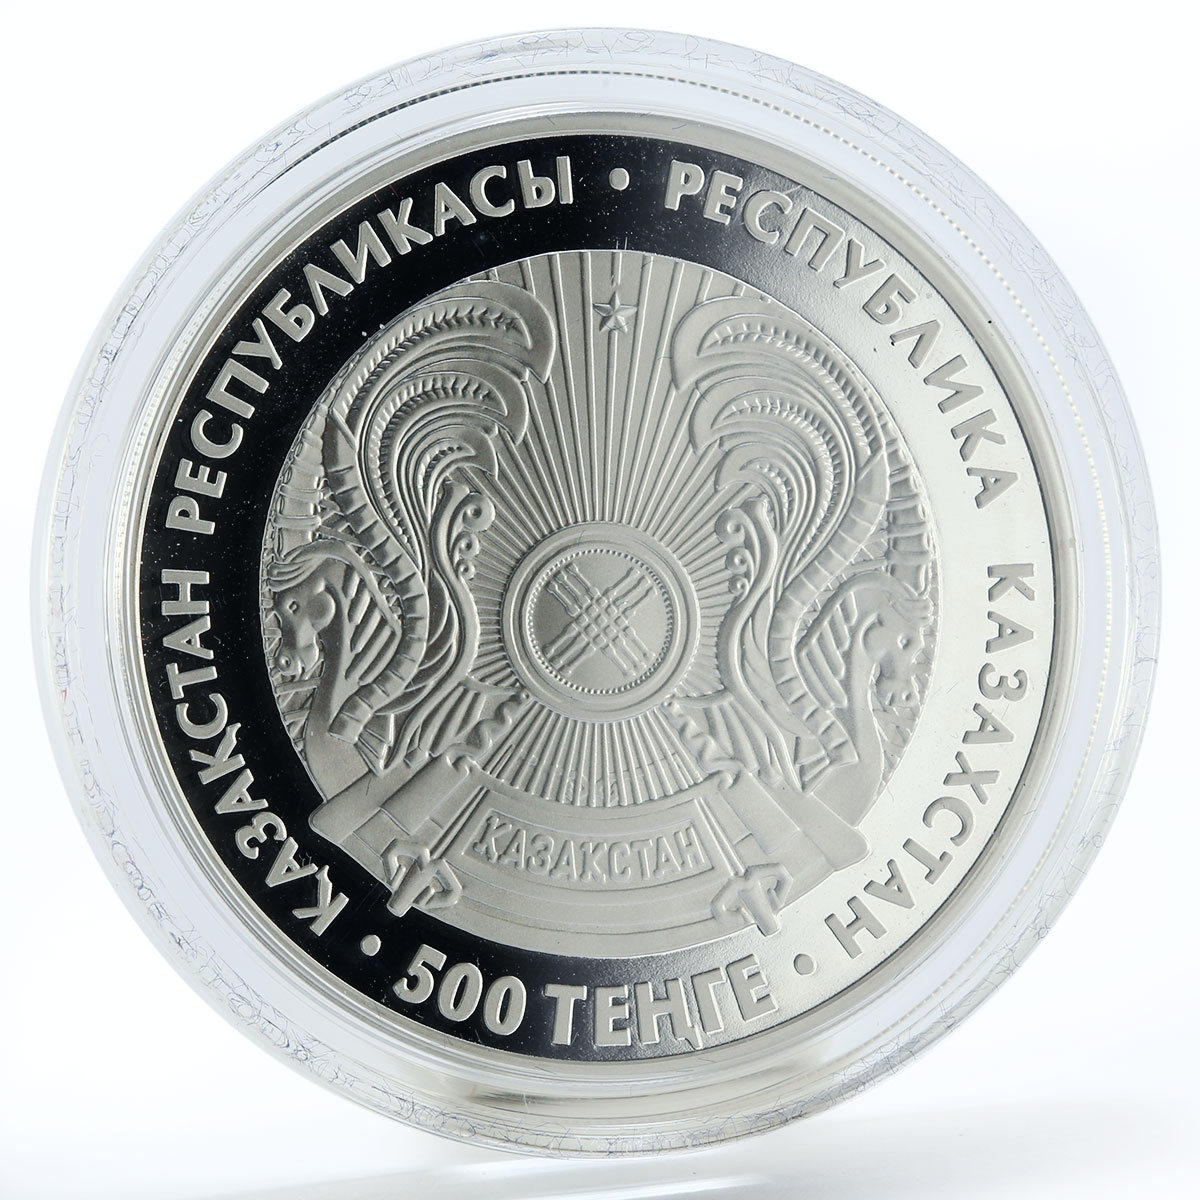 Kazakhstan 500 tenge Beket-Ata Sanctuary proof silver coin 2010